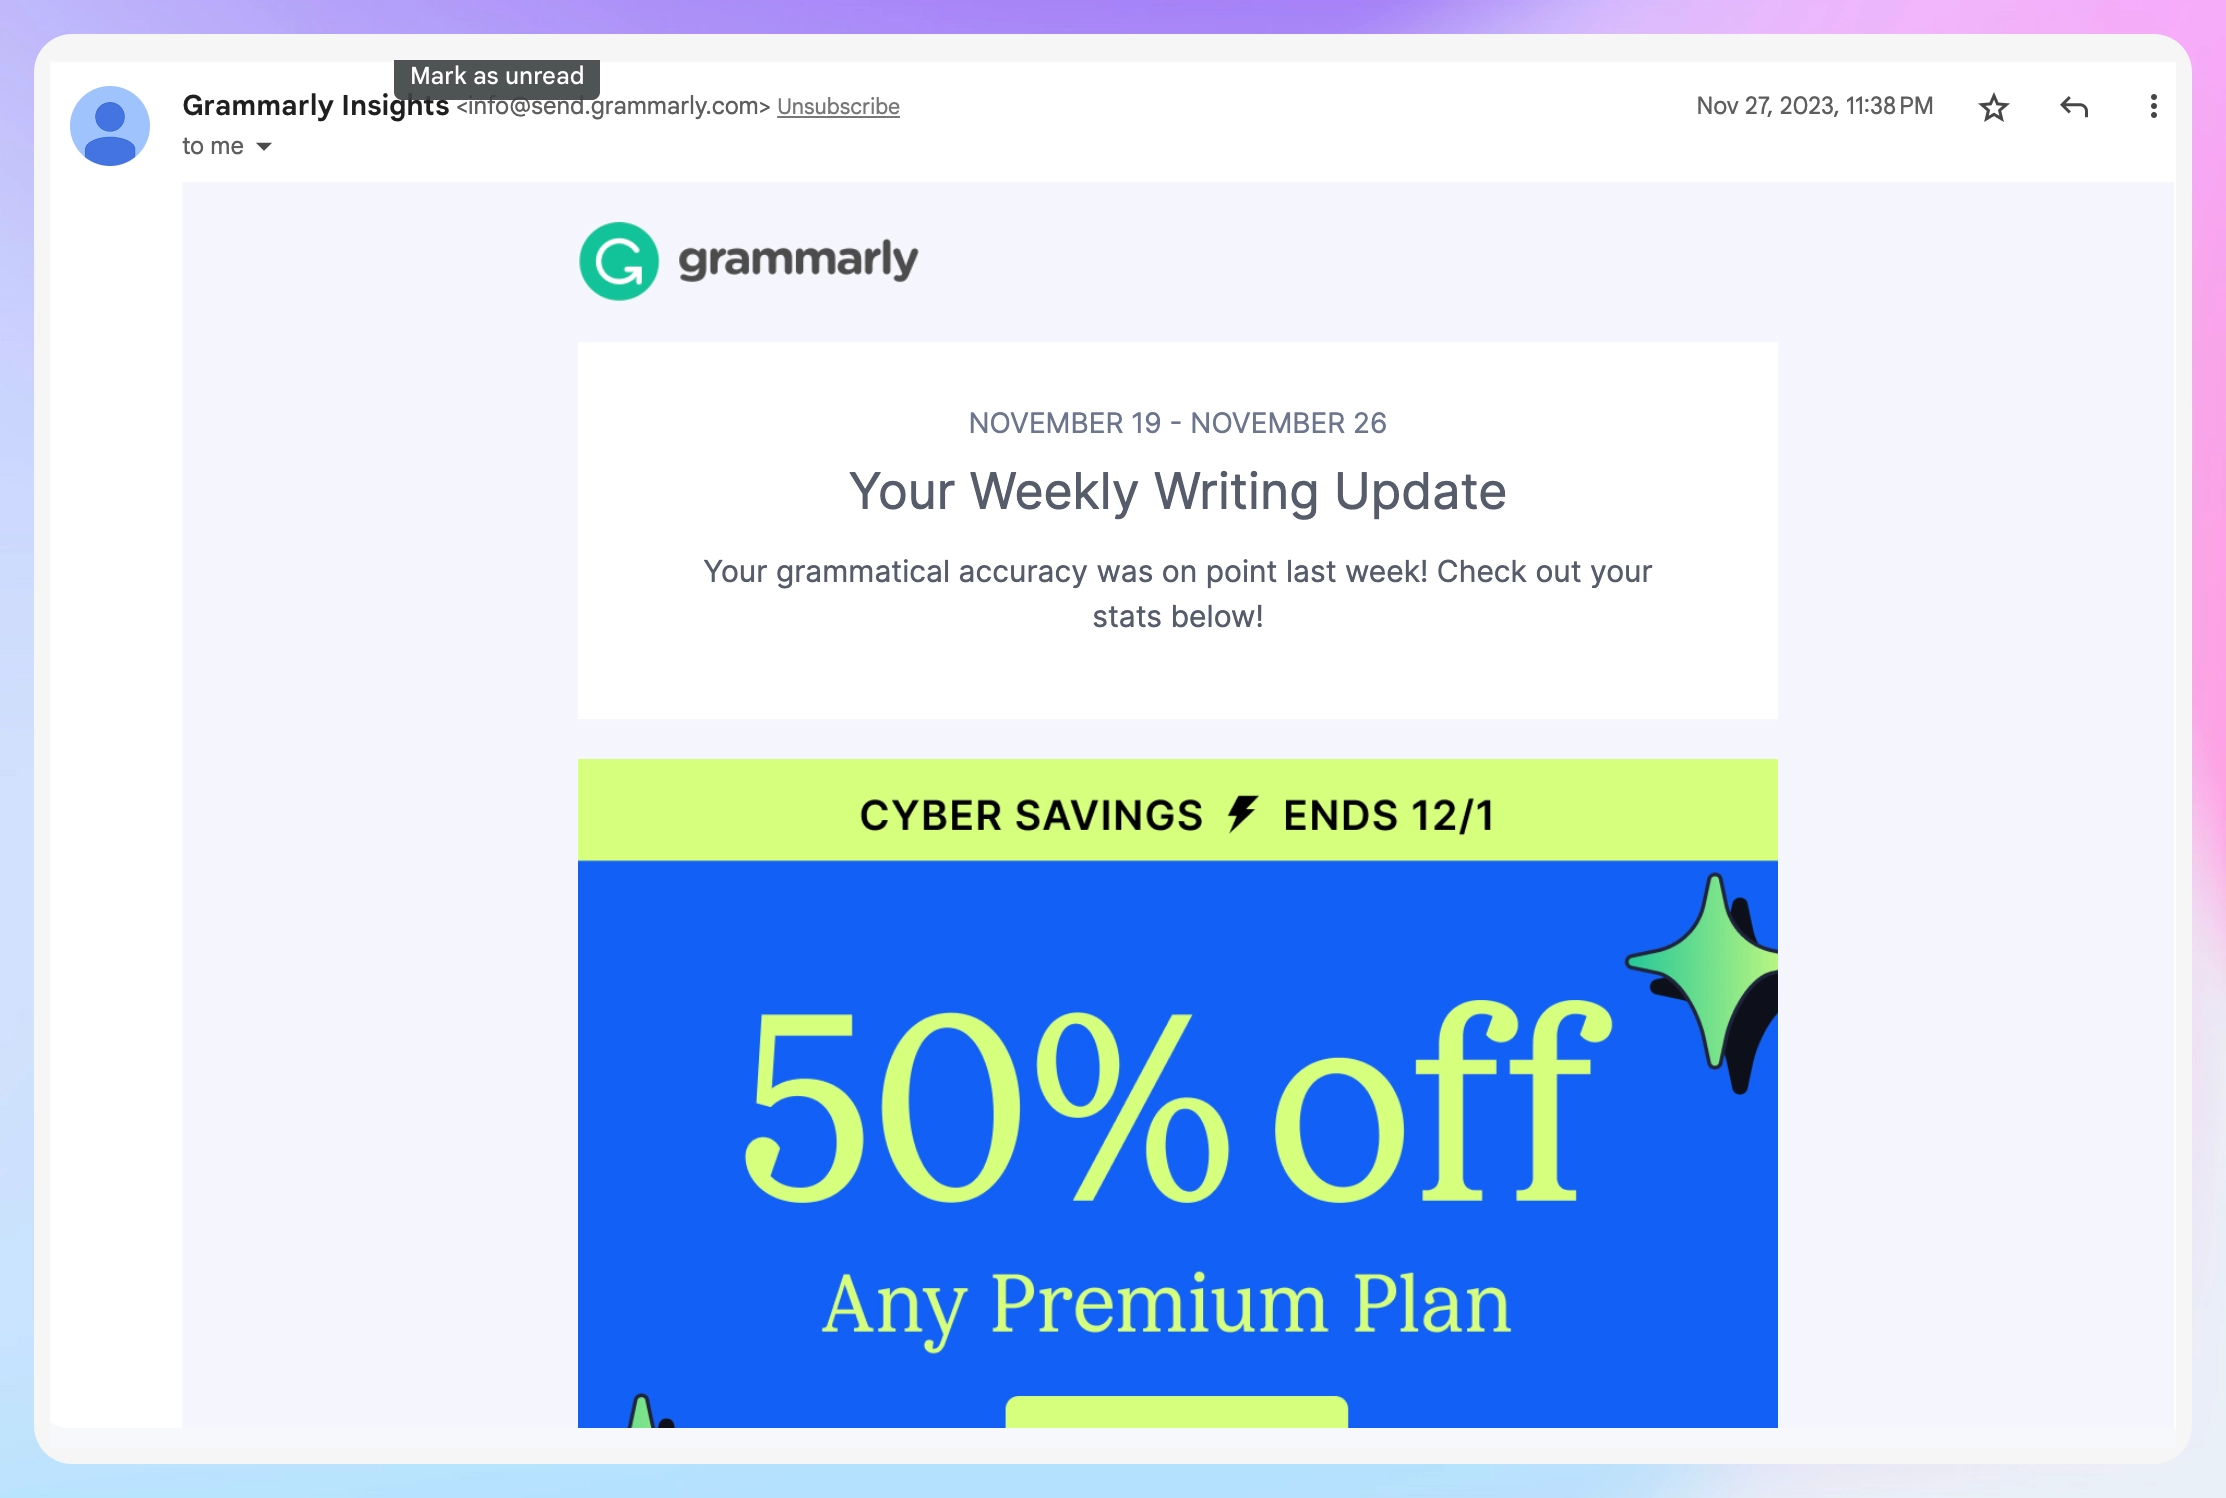 Grammarly email marketing - b2b saas marketing